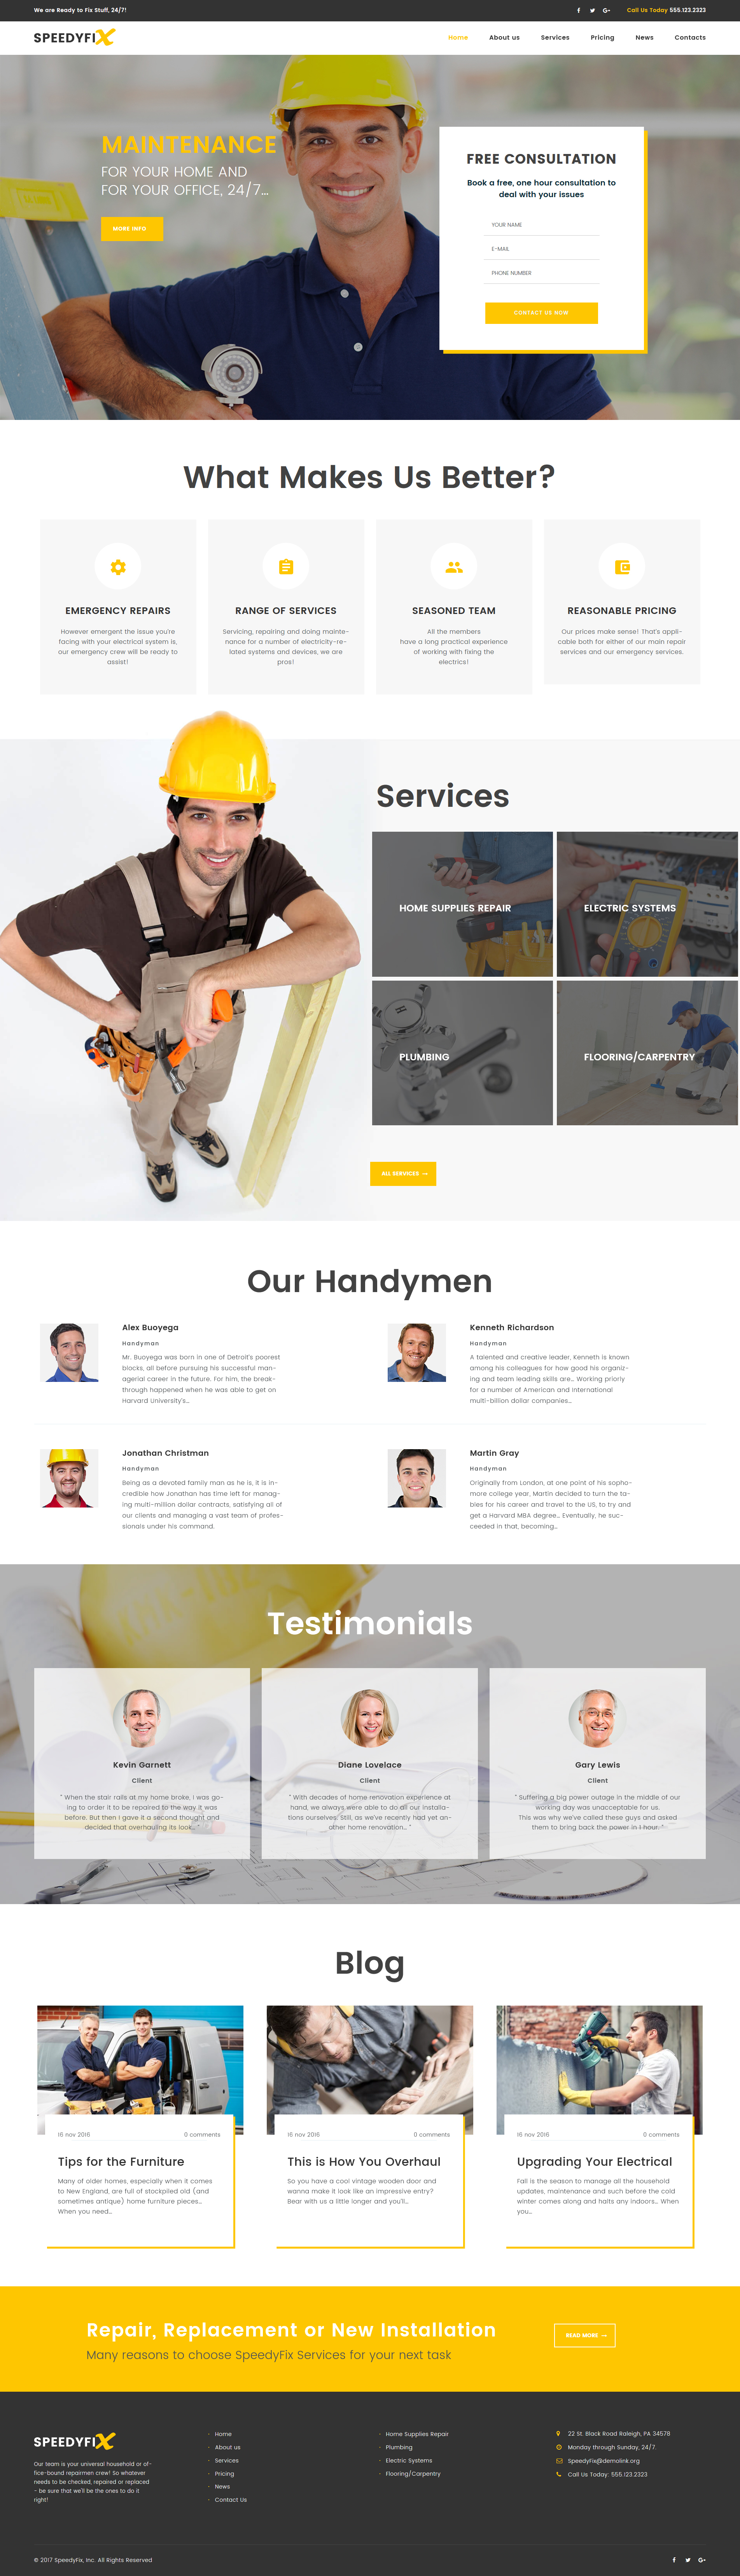 SpeedyFix - Handyman Services WordPress Theme